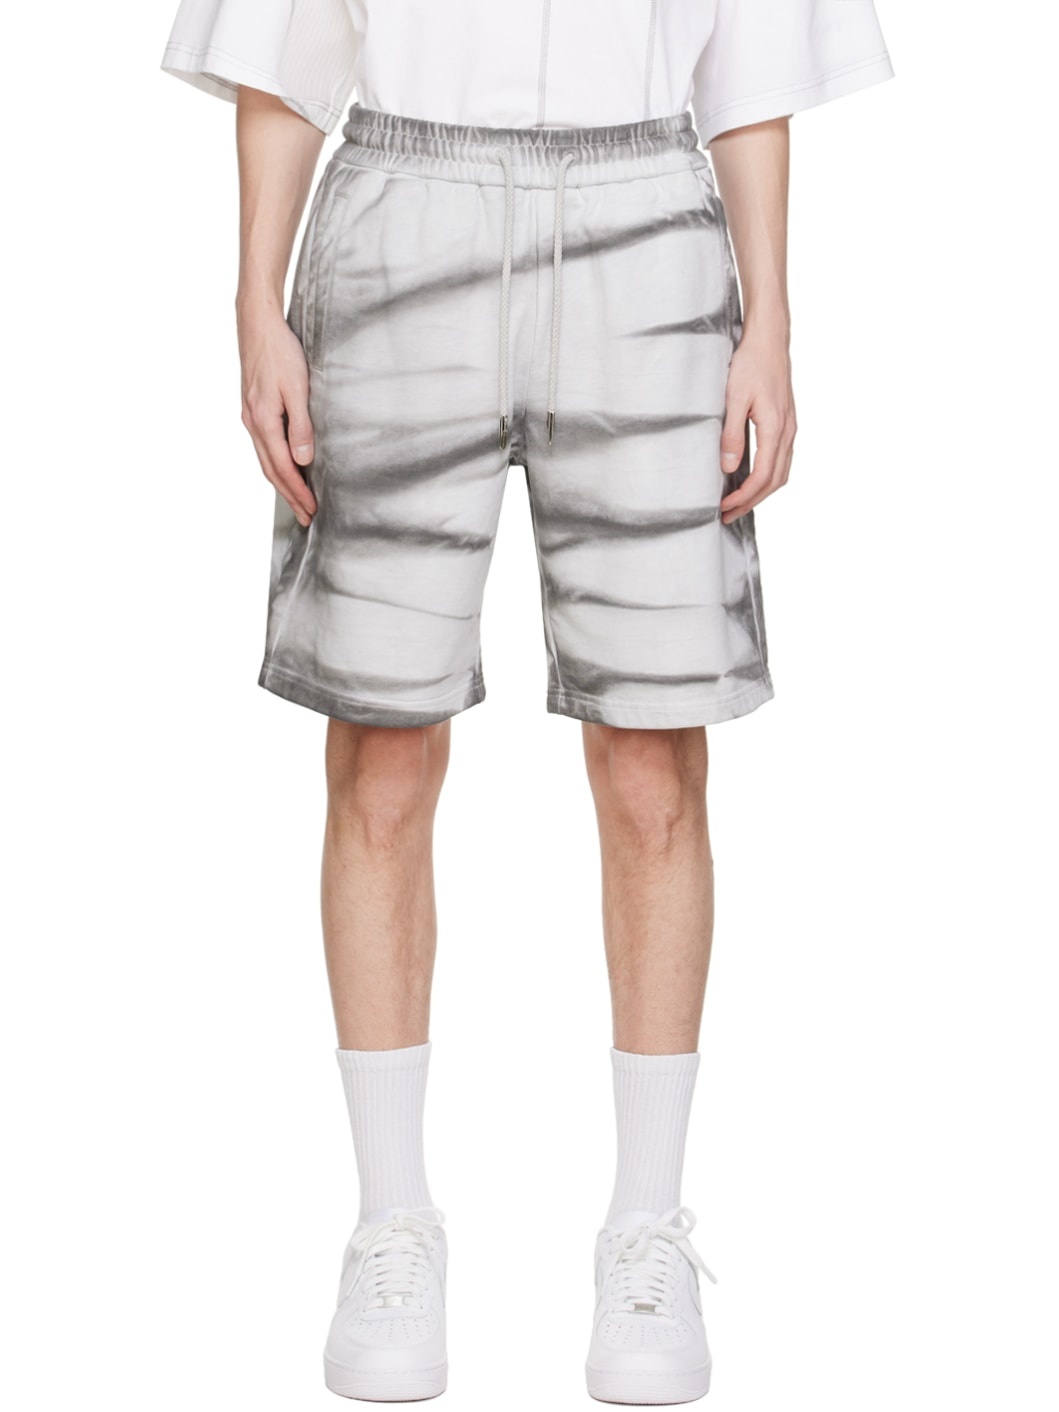 Gray Tie-Dye Shorts - 1